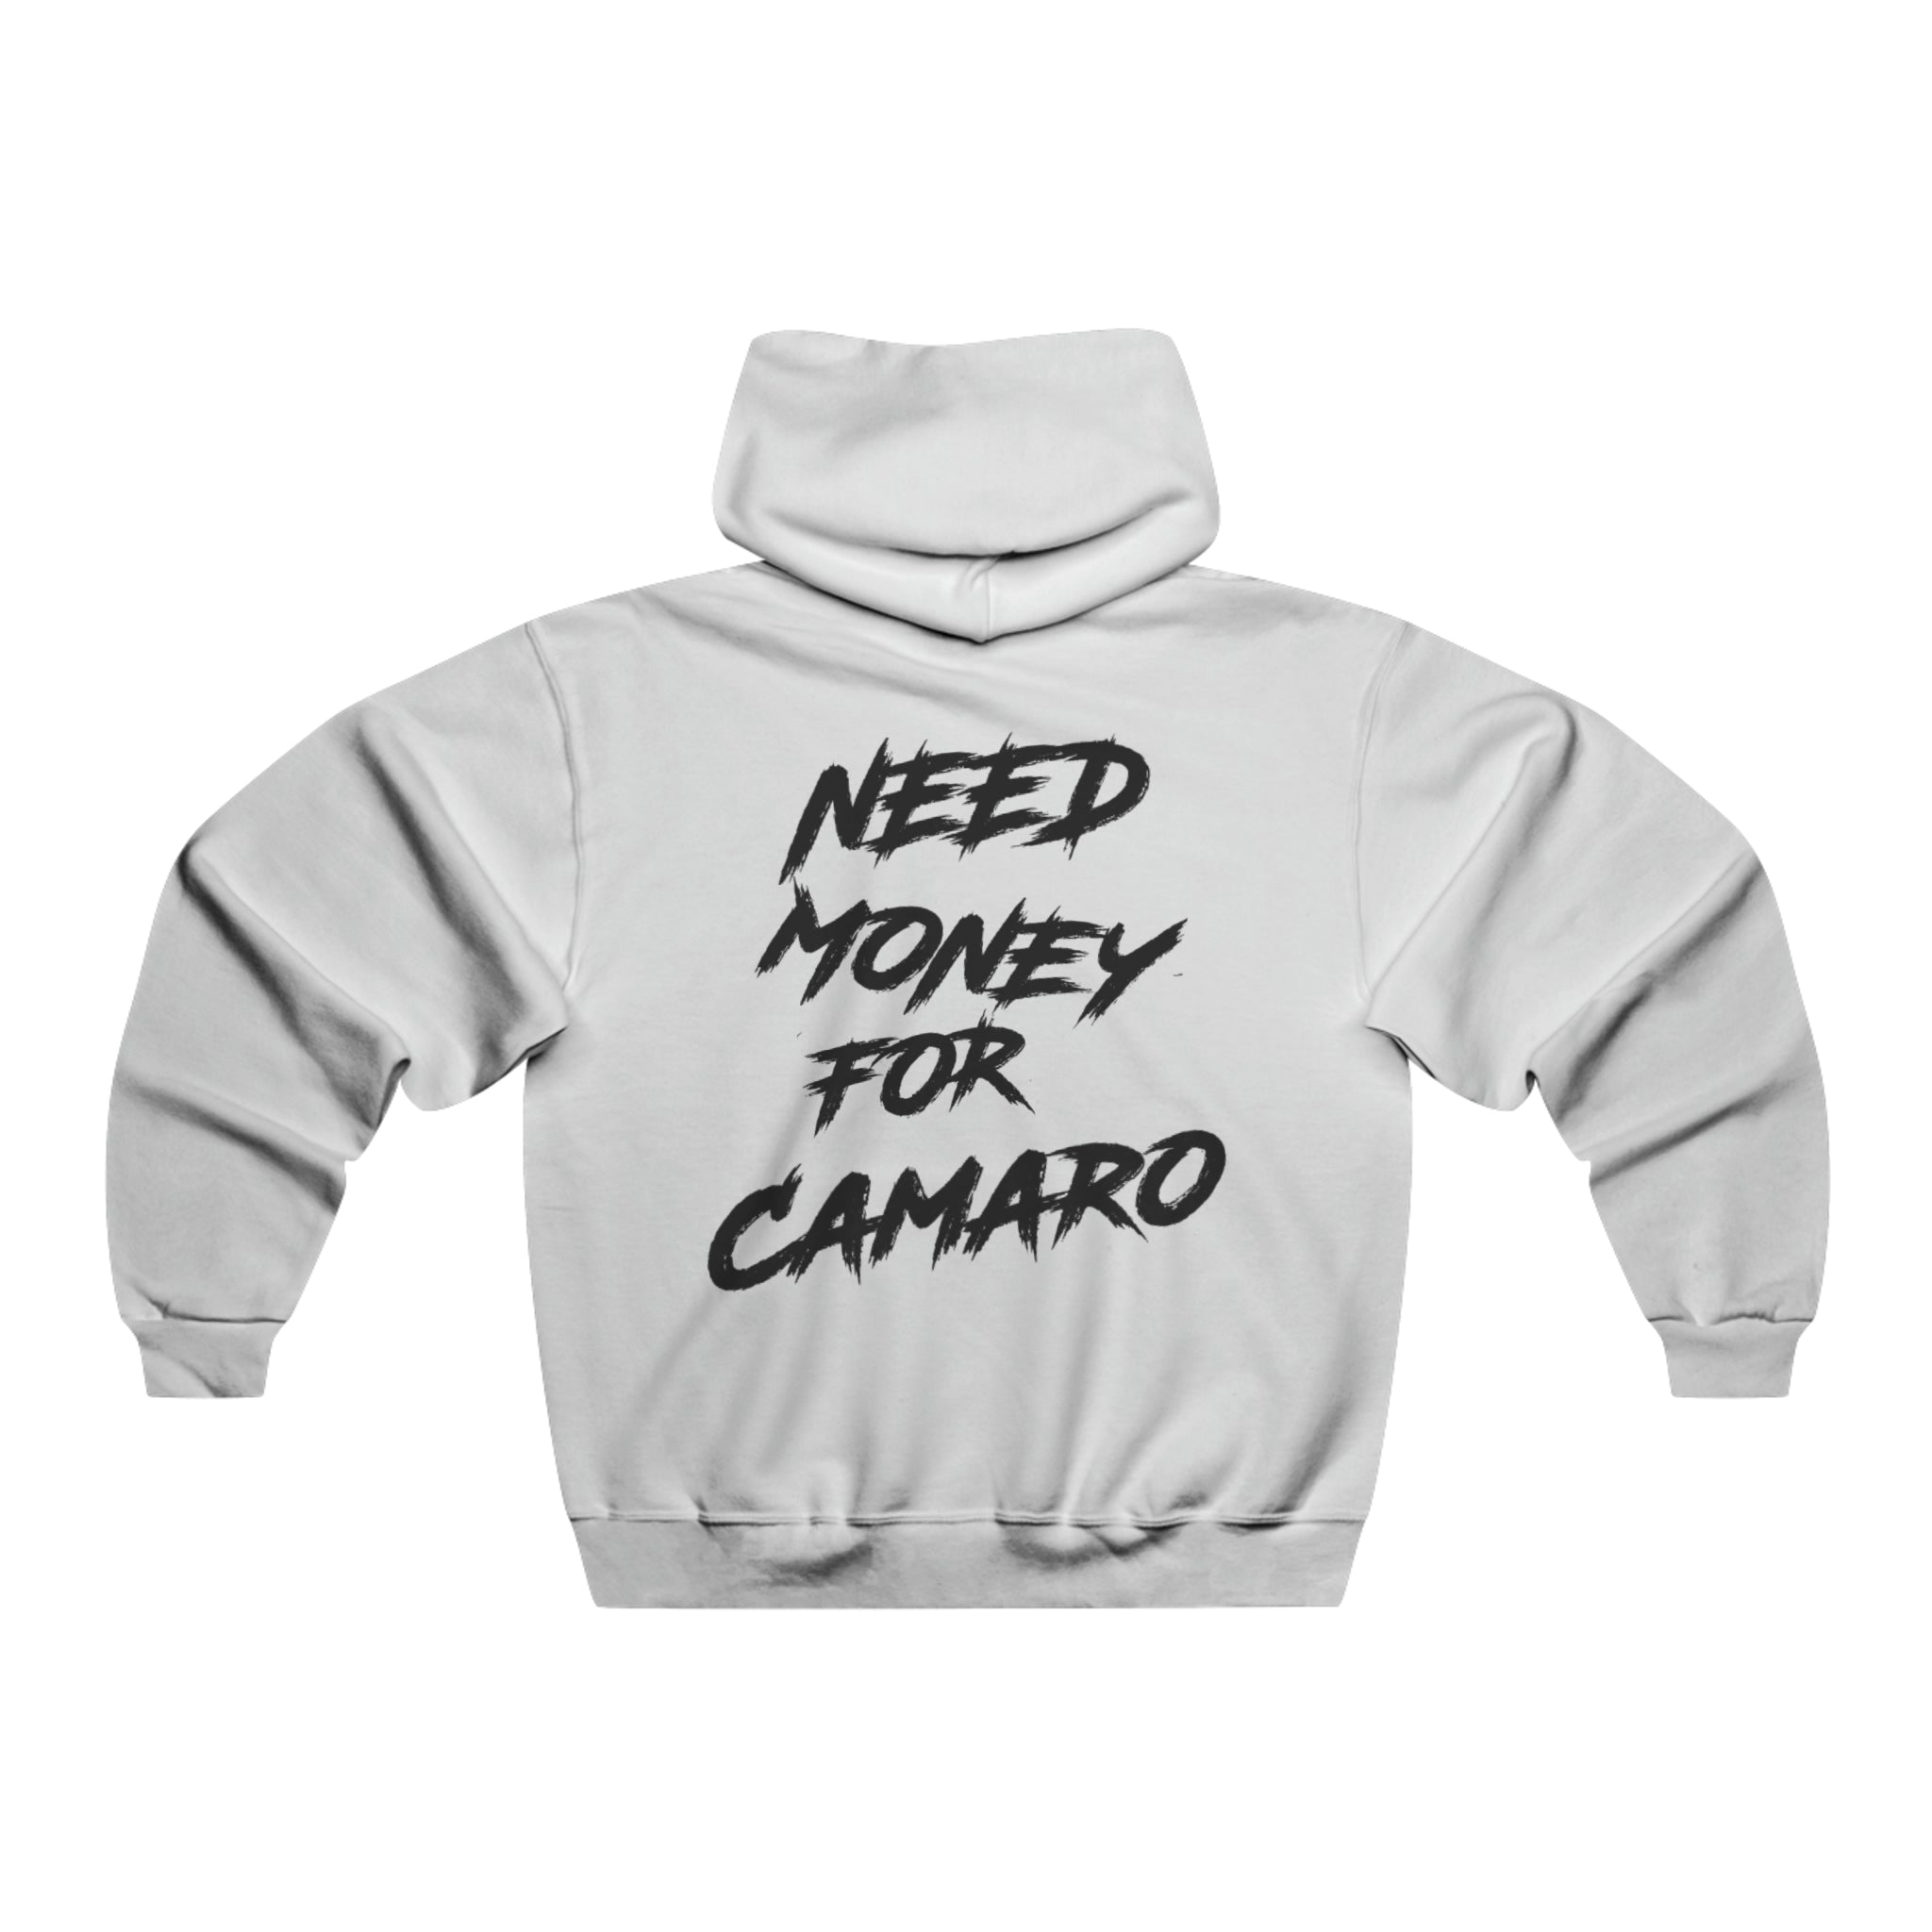 Need Money For Camaro Hoodie